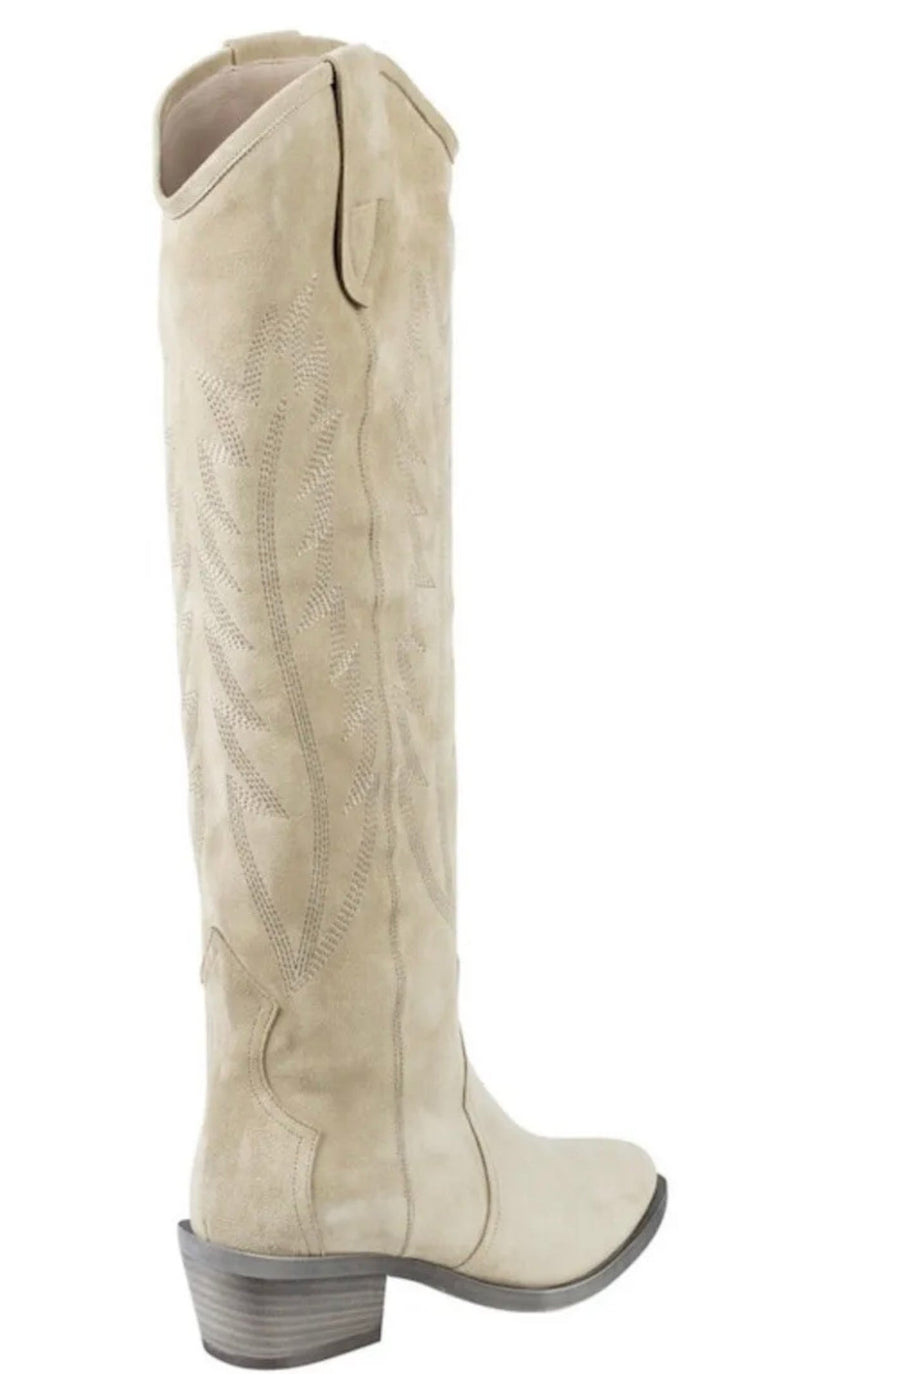 BIANCA BUCCHERI Western Inspired Knee High Boots Size 38